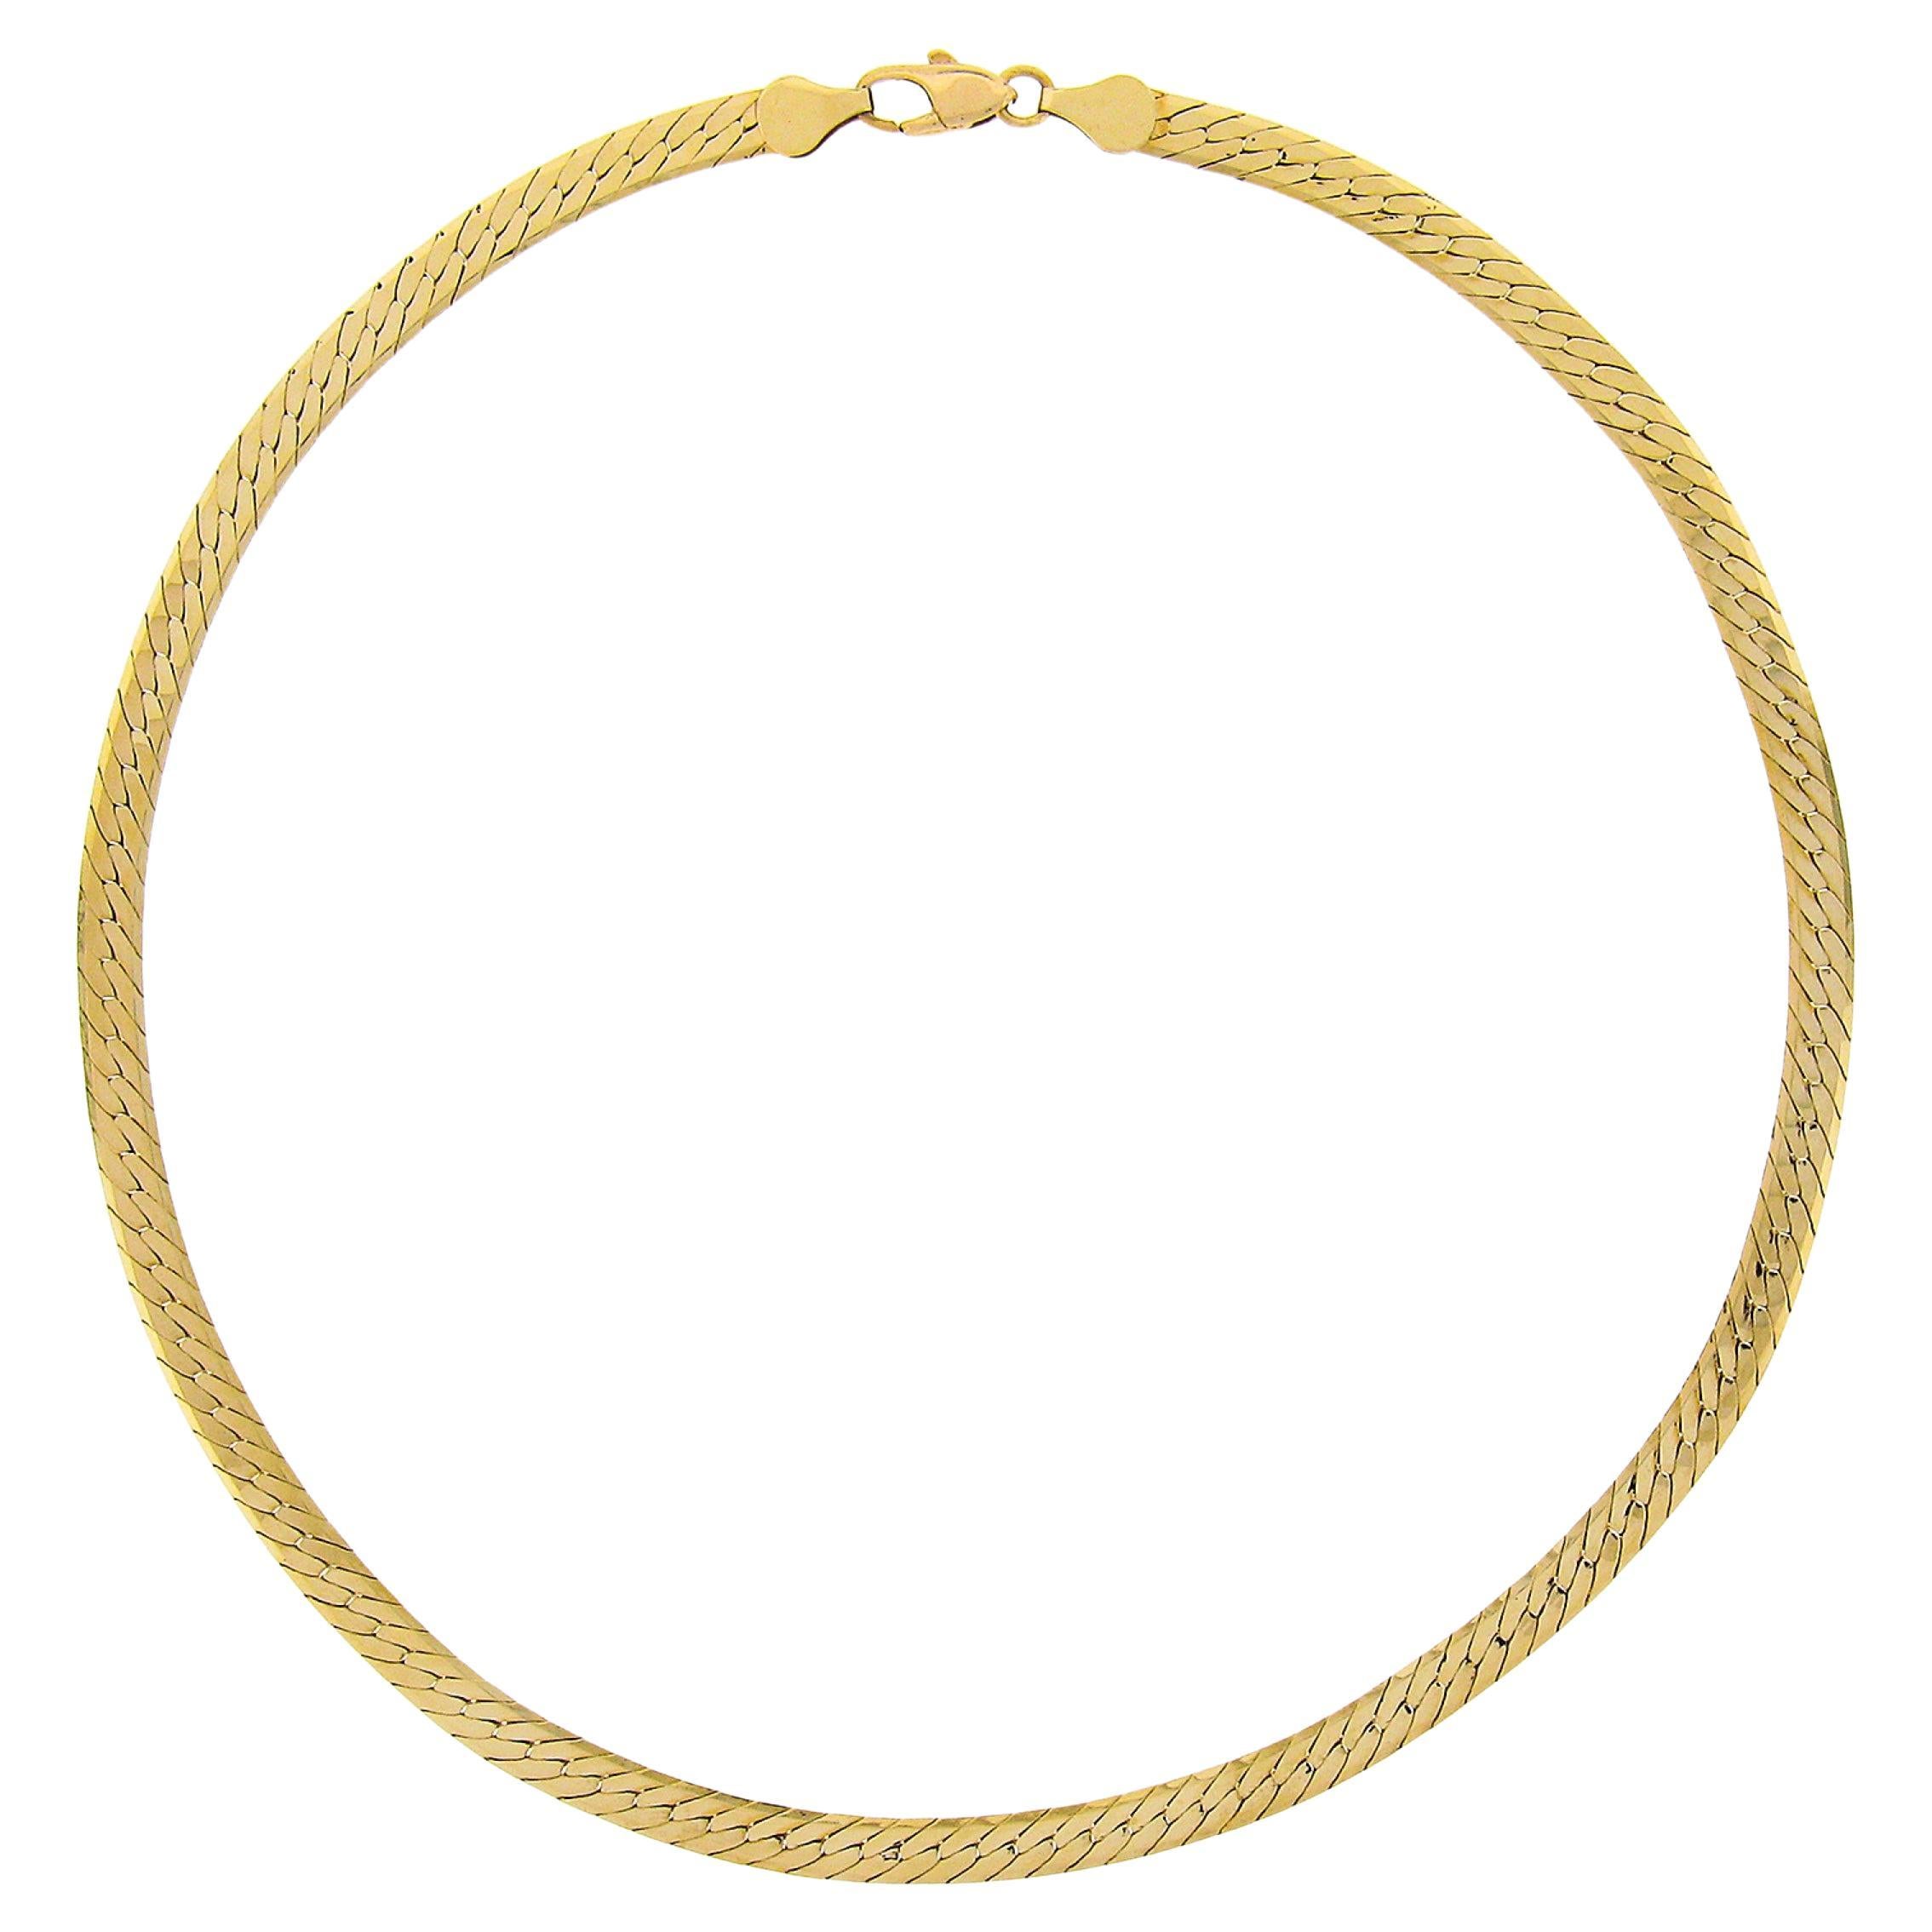 Italian 14k Gold 5mm 16" Polished Flat Herringbone Thick Link Chain Necklace